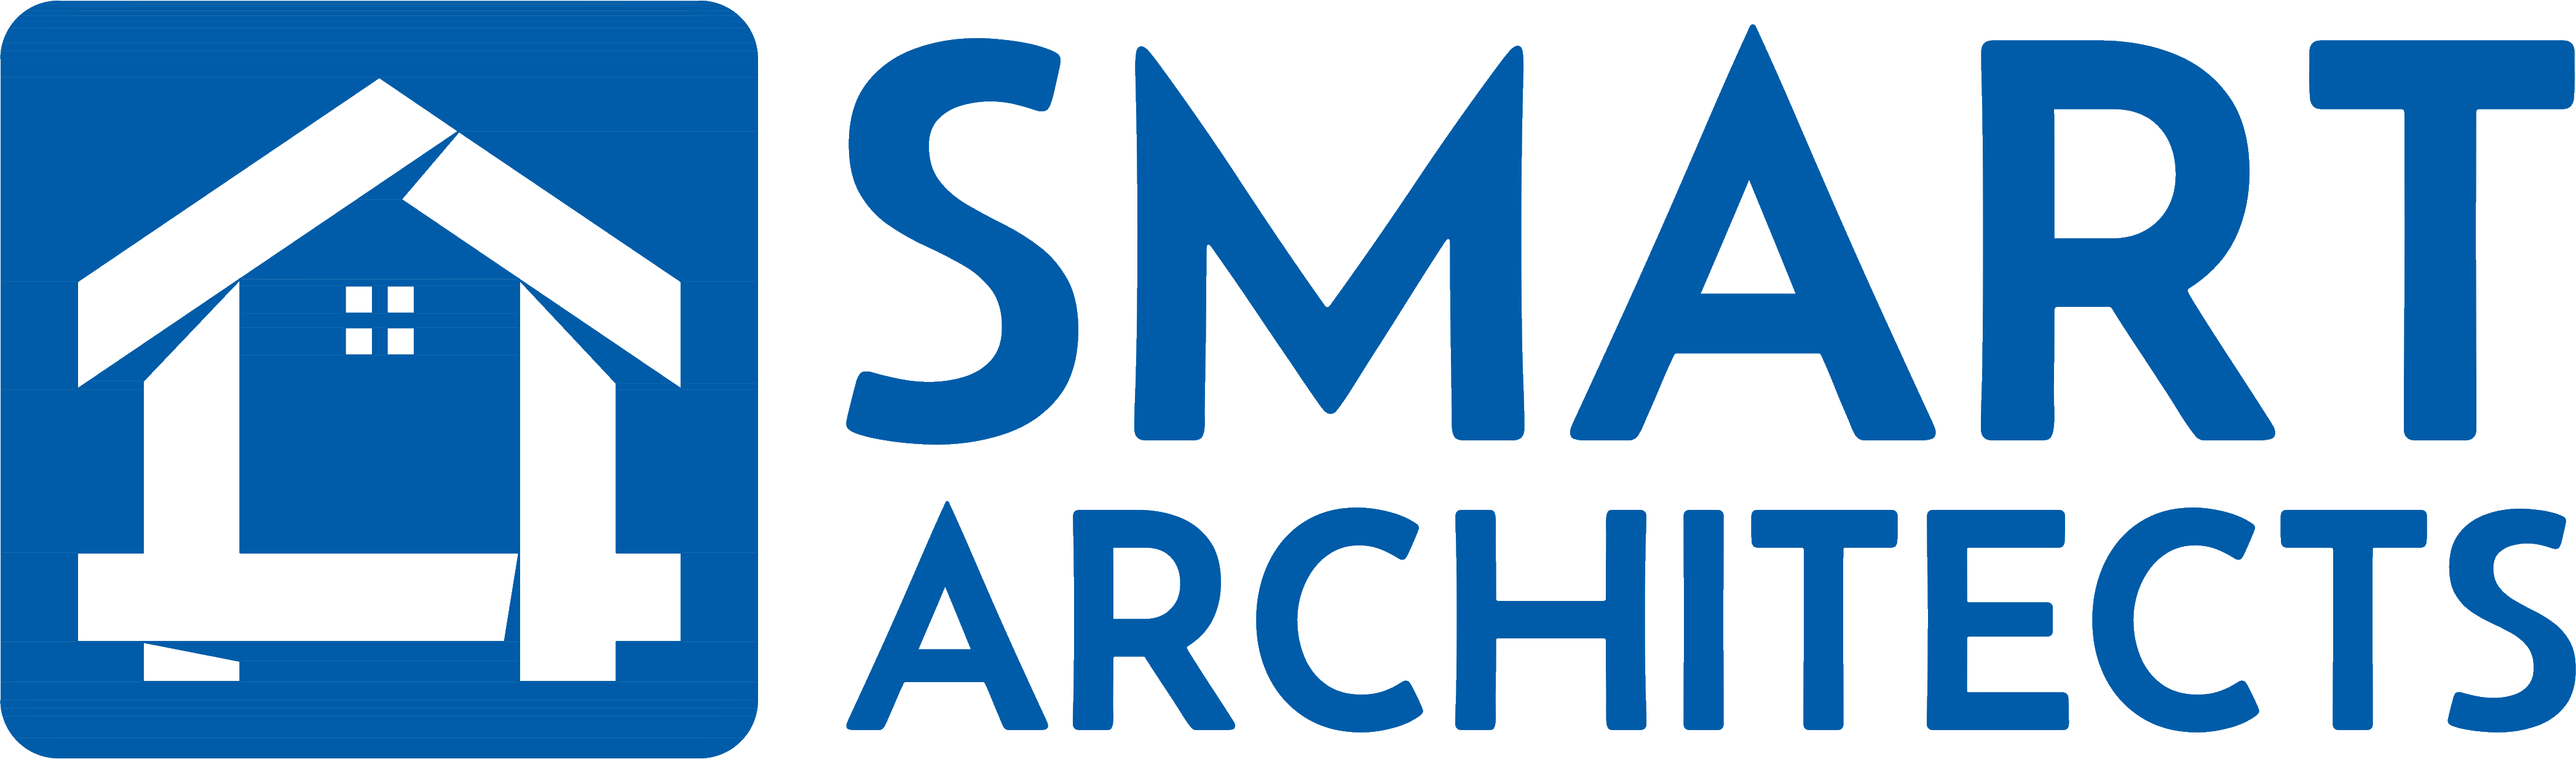 Smart Architects